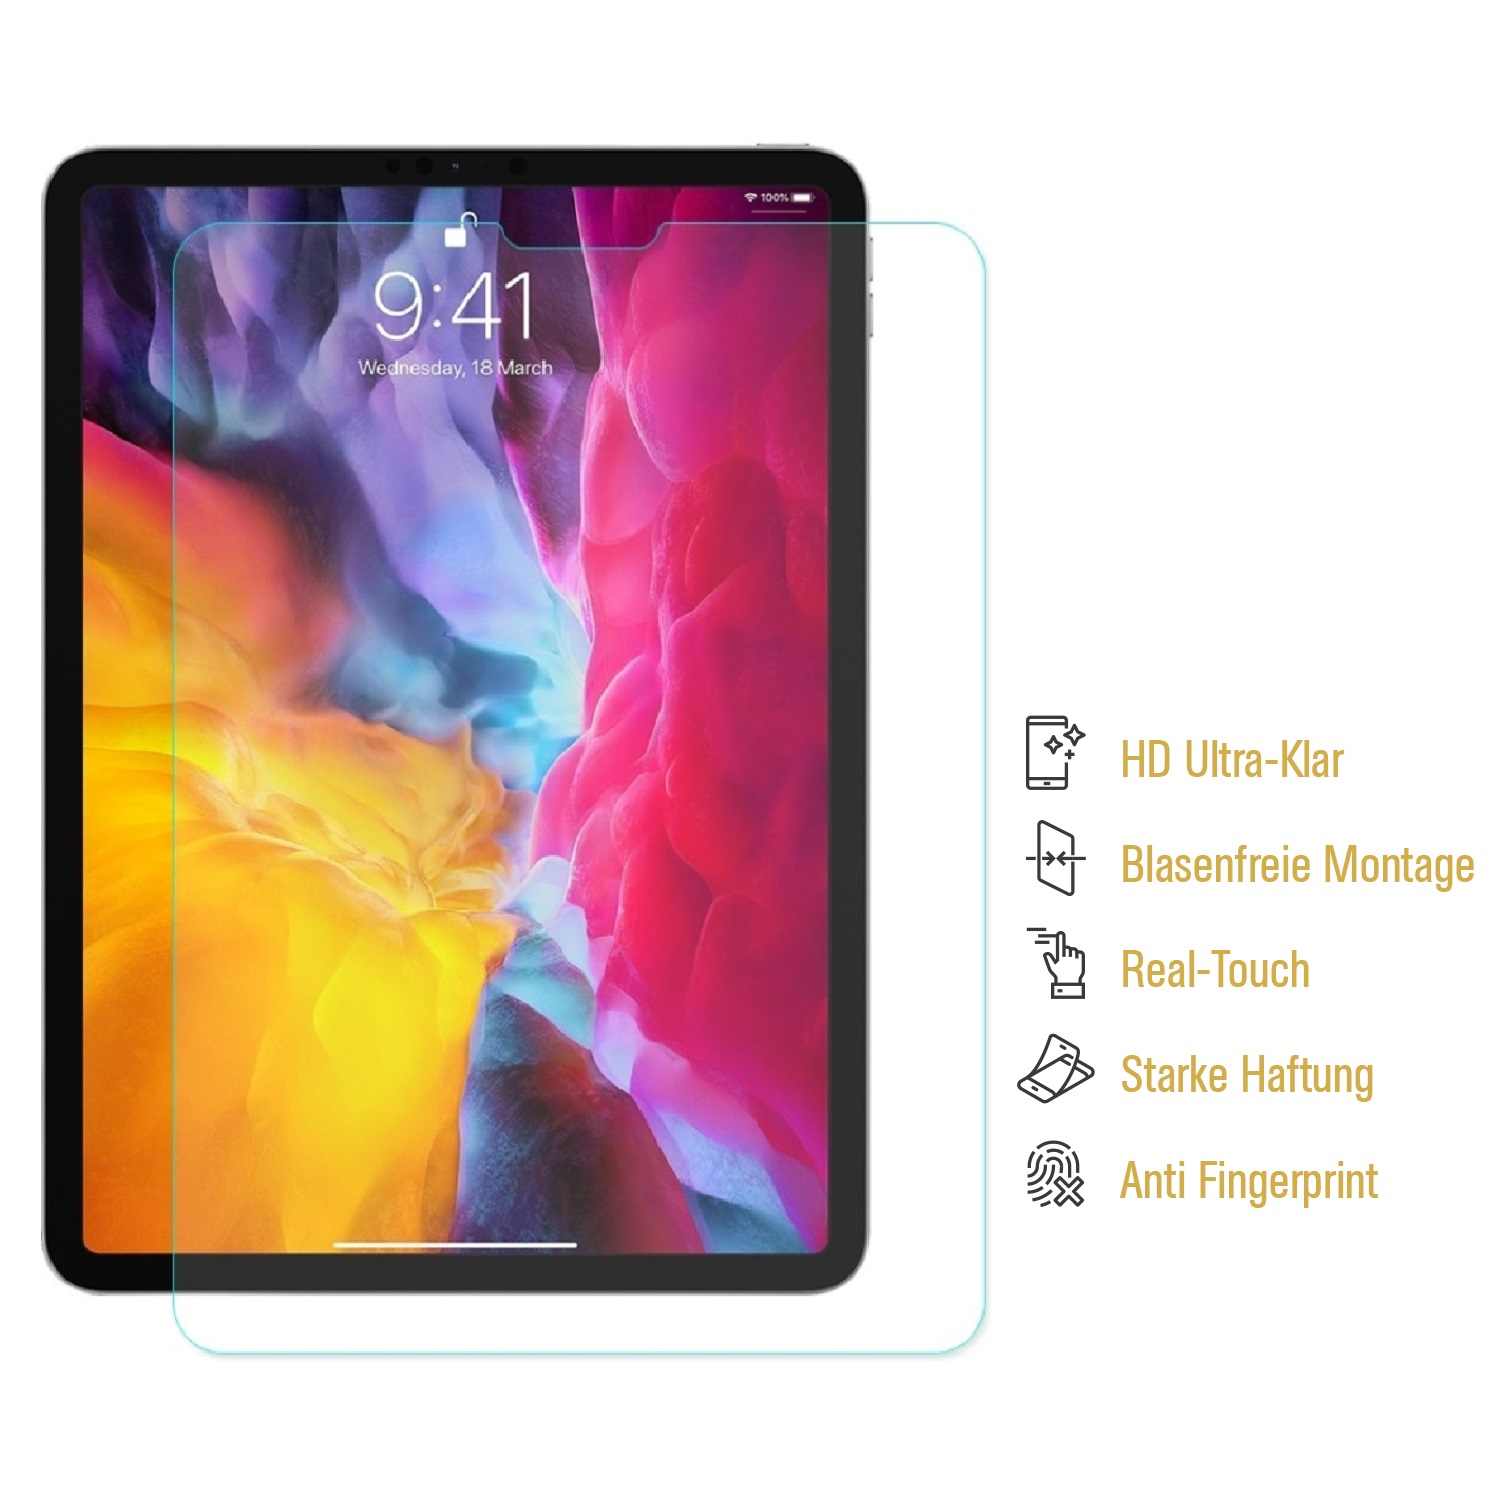 Schutzfolie iPad KLAR Pro 2x 2020 2019 12.9 2018 PROTECTORKING Displayschutzfolie Apple 2022) Displayschutzfolie(für HD